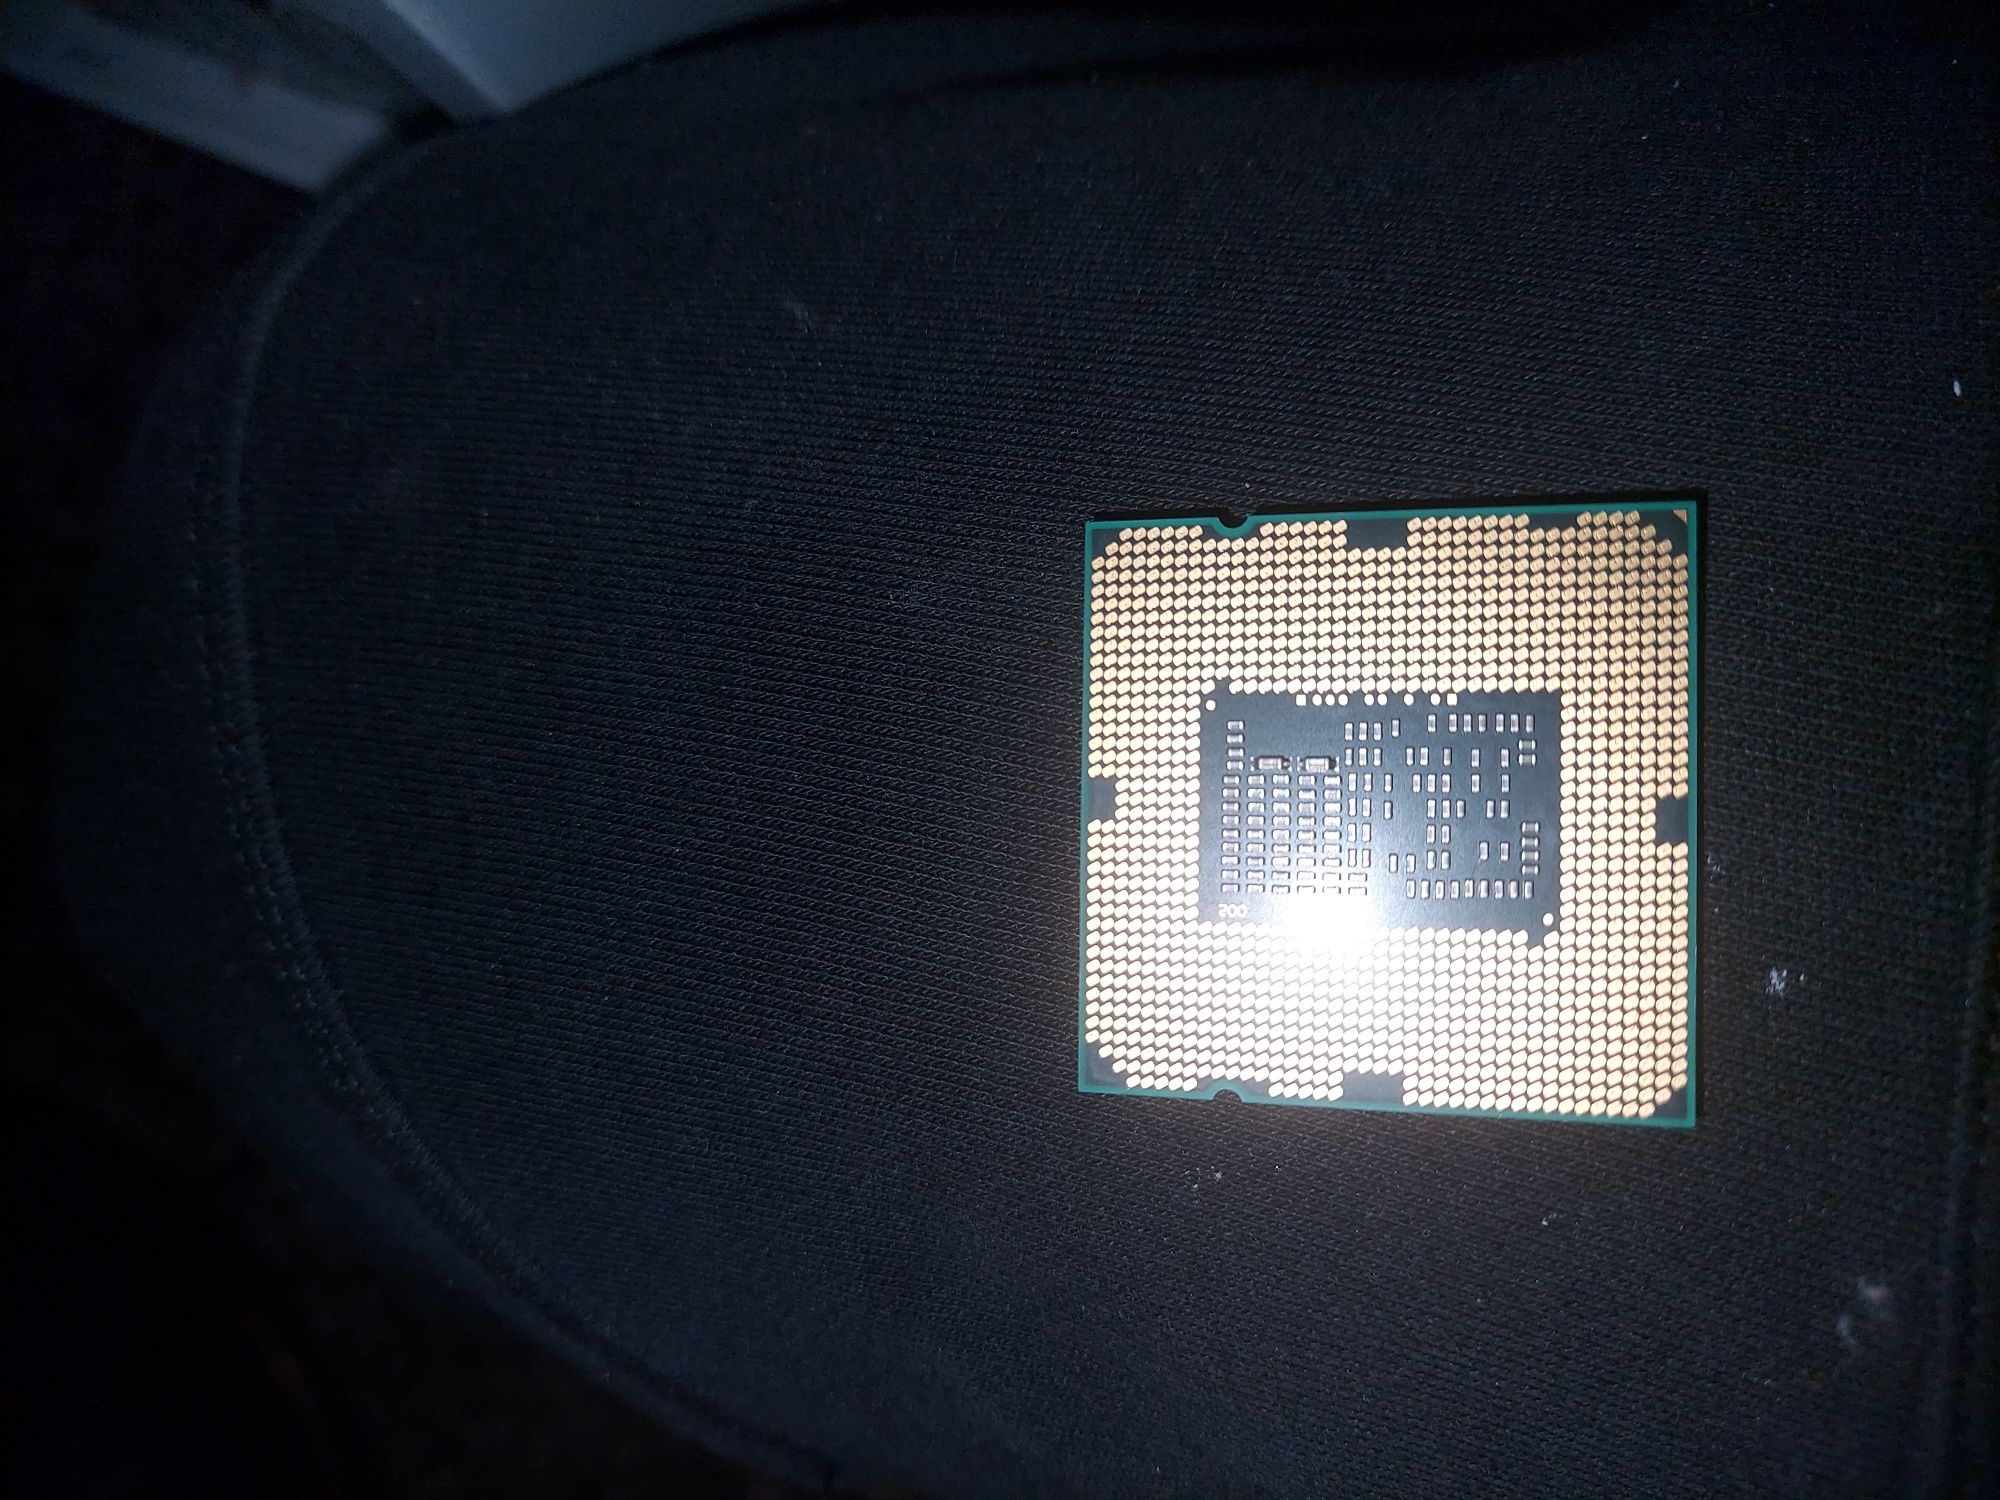 Процессор Intel Core i5 655K